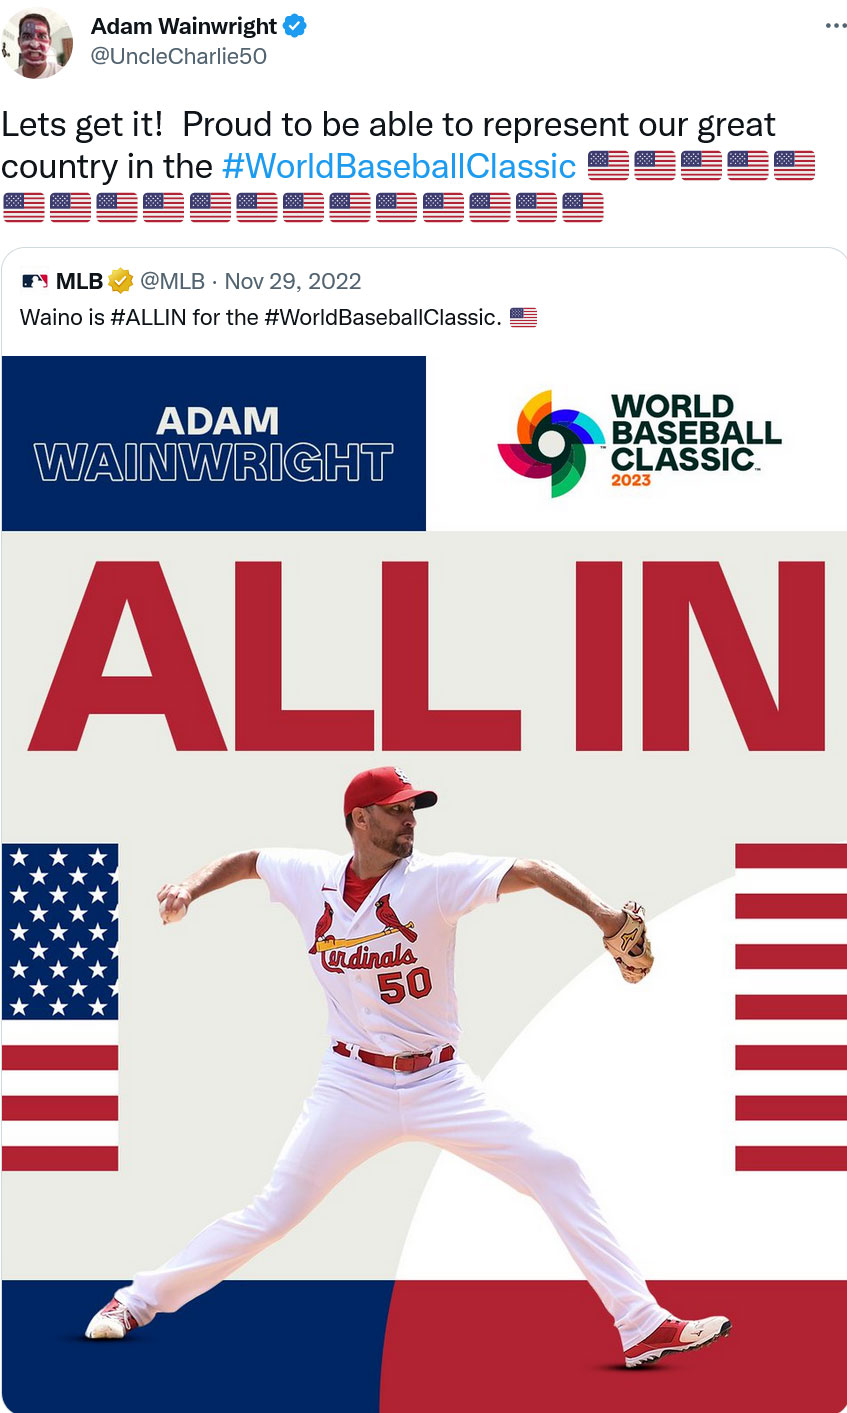 Adam Wainwright's tweet announcement for World Baseball Classic